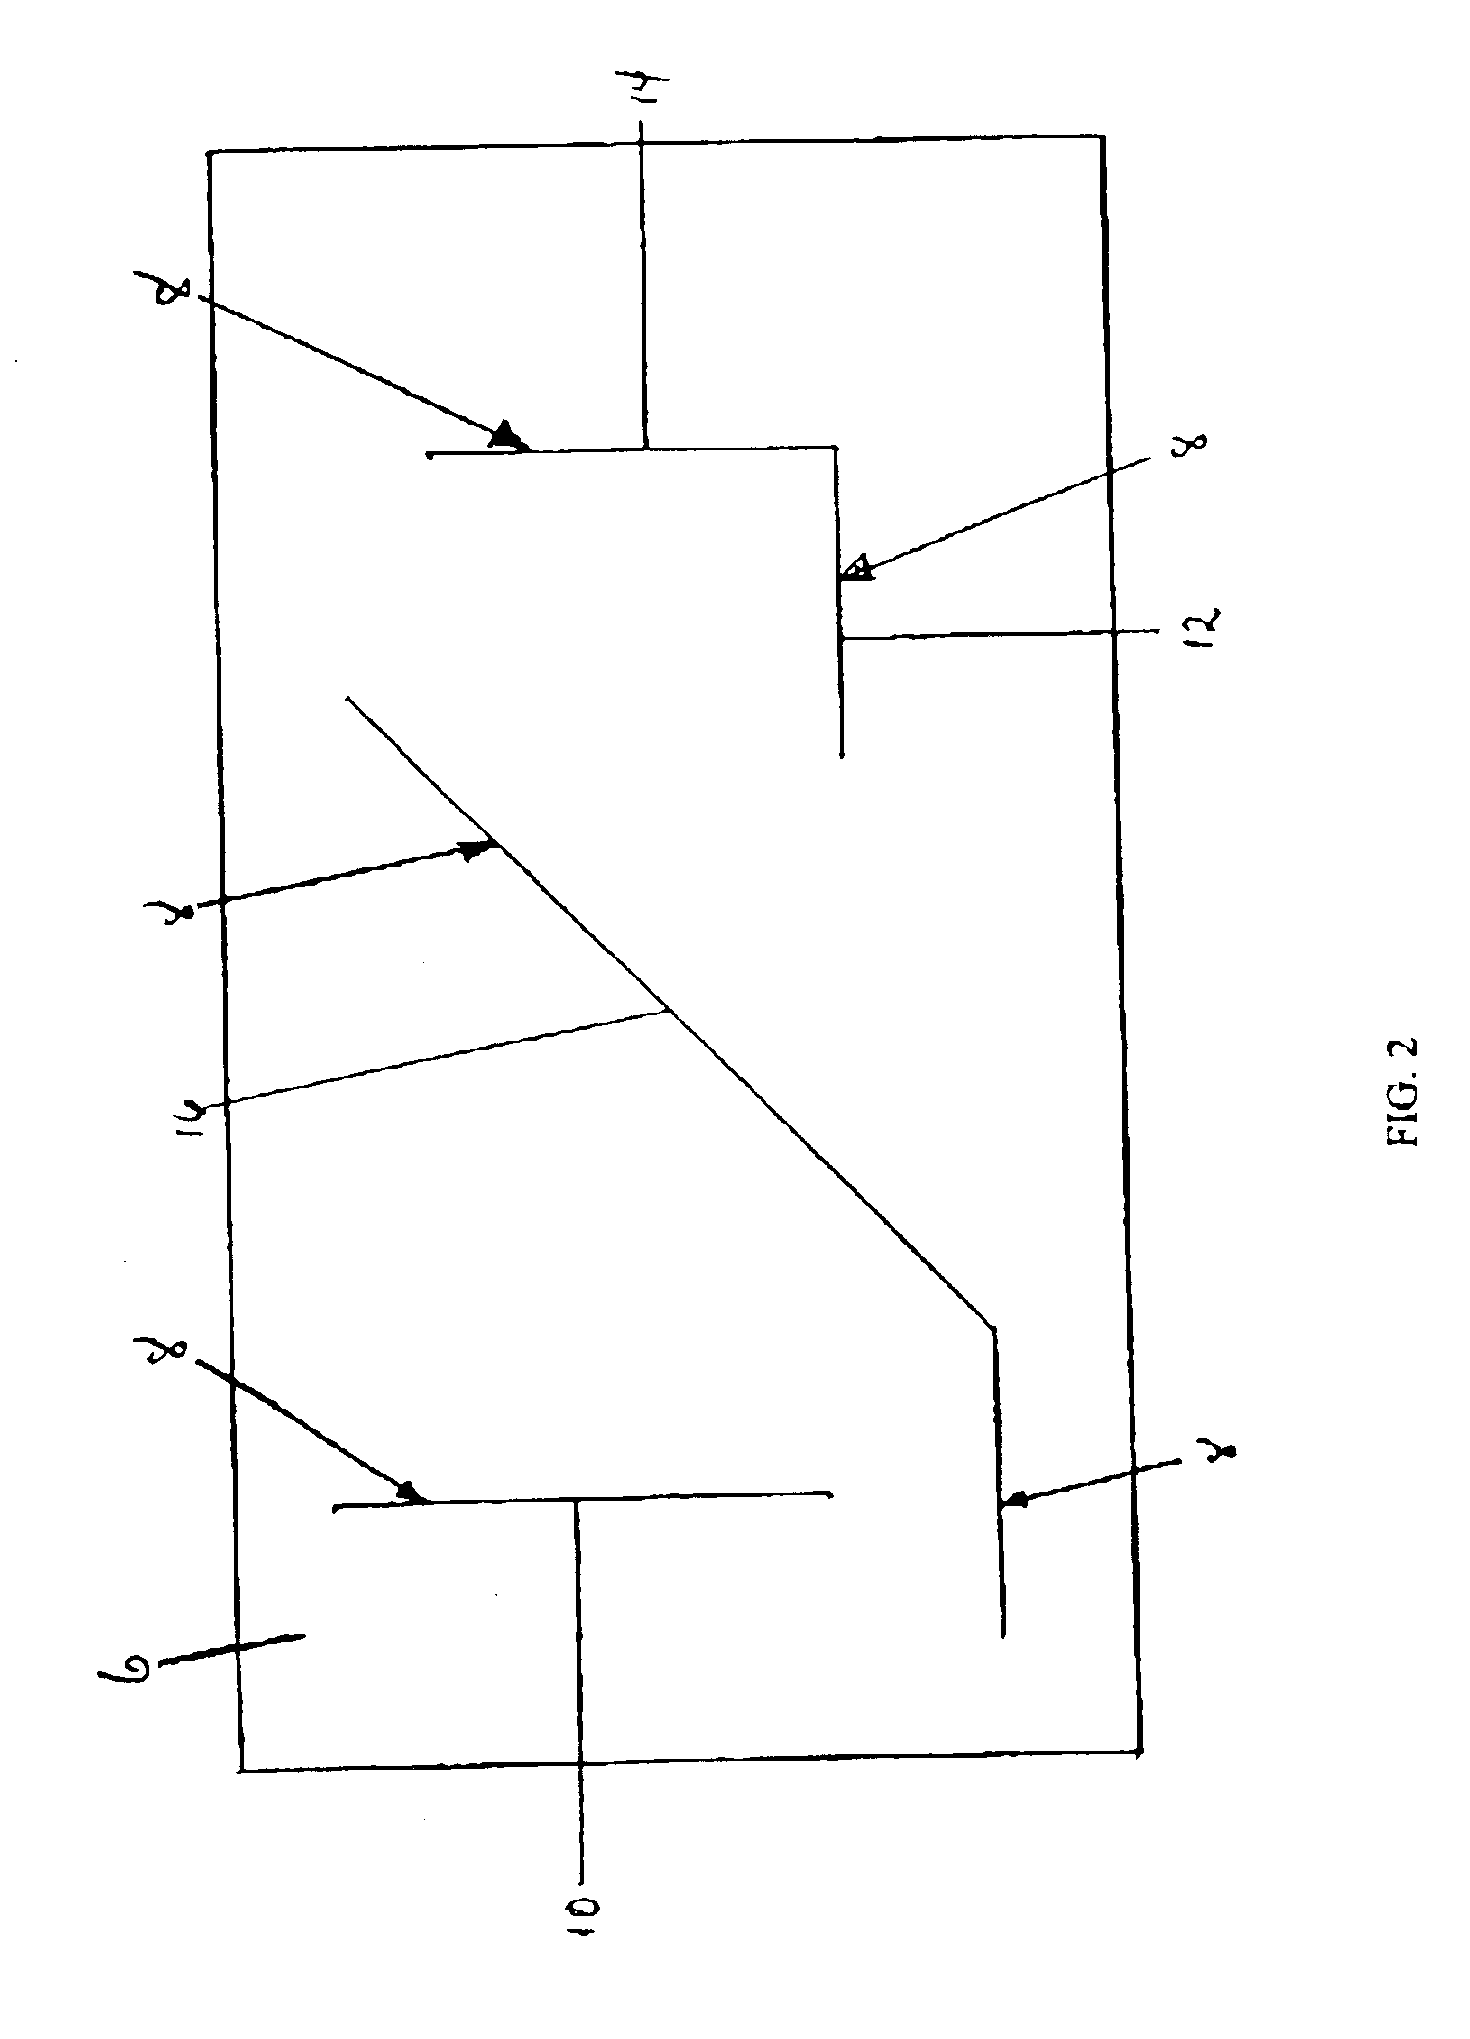 Simplified tiling pattern method